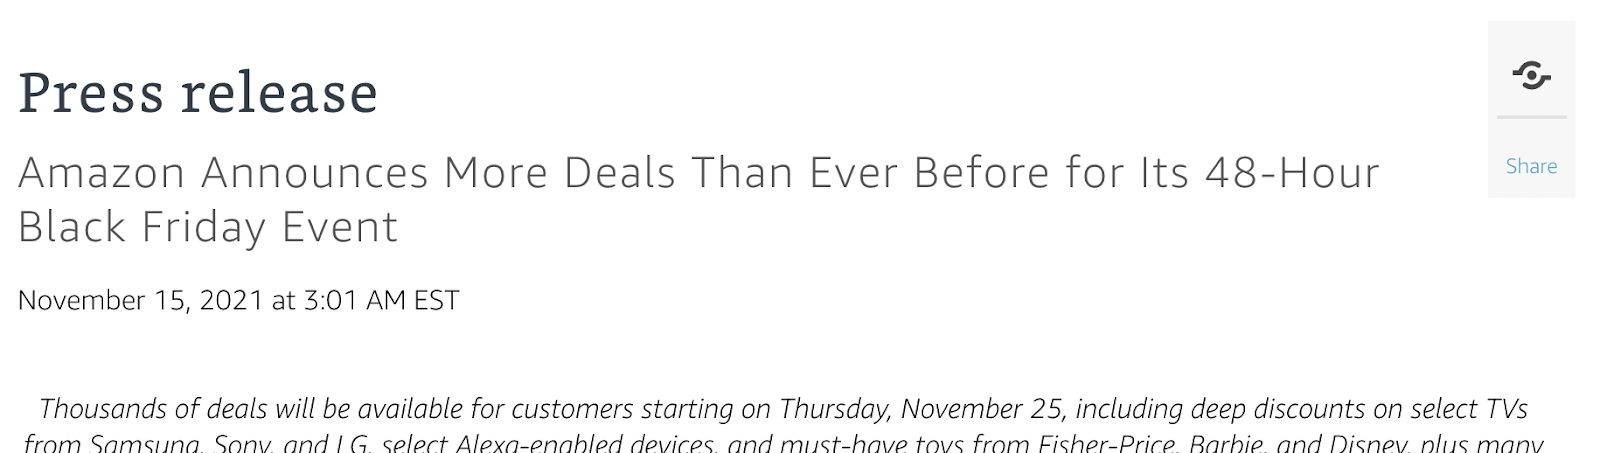 Amazon press release on record-breaking deals